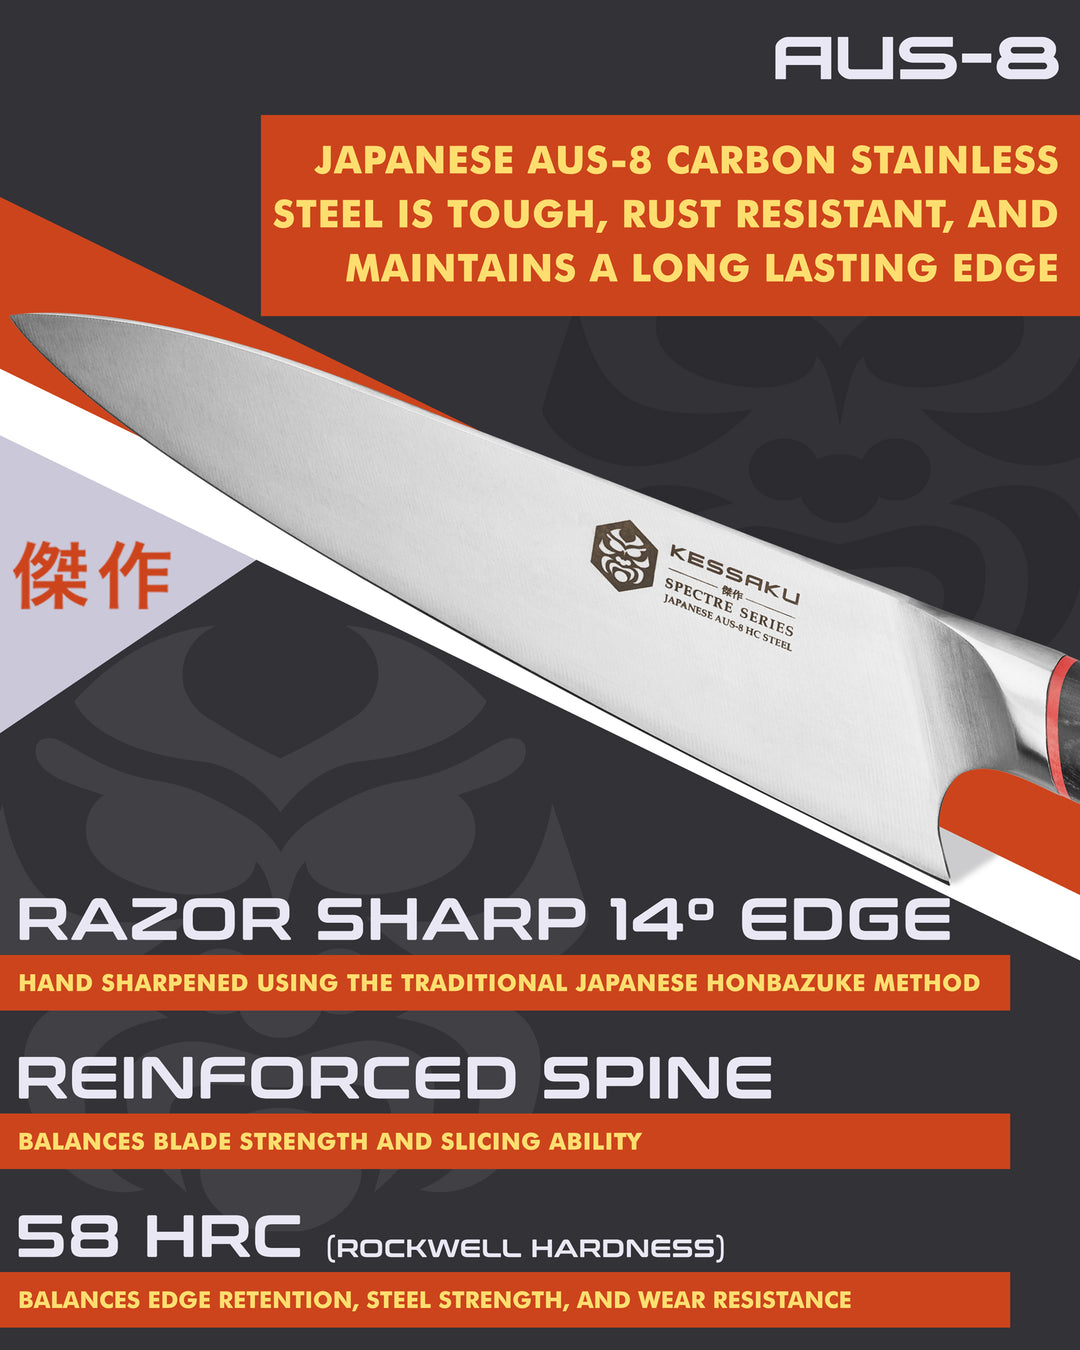 Kessaku Spectre Chef's Knife blade features: AUS-8 steel, 58 HRC, 14 degree edge, reinforced spine